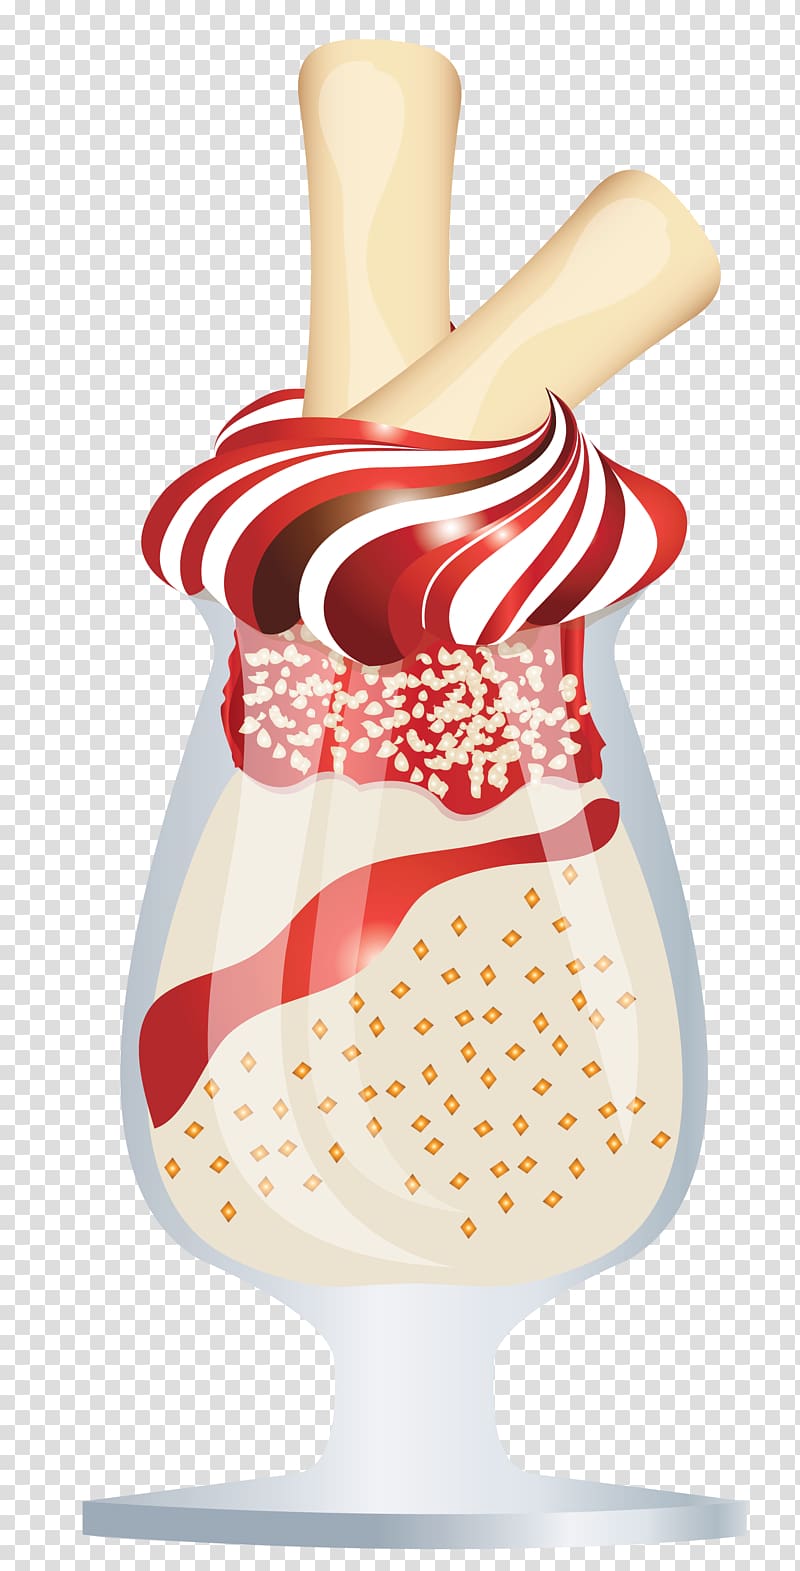 red and white cream in drinking glass illustration, Ice cream cone Frozen yogurt Gelato, Ice Cream Sundae transparent background PNG clipart